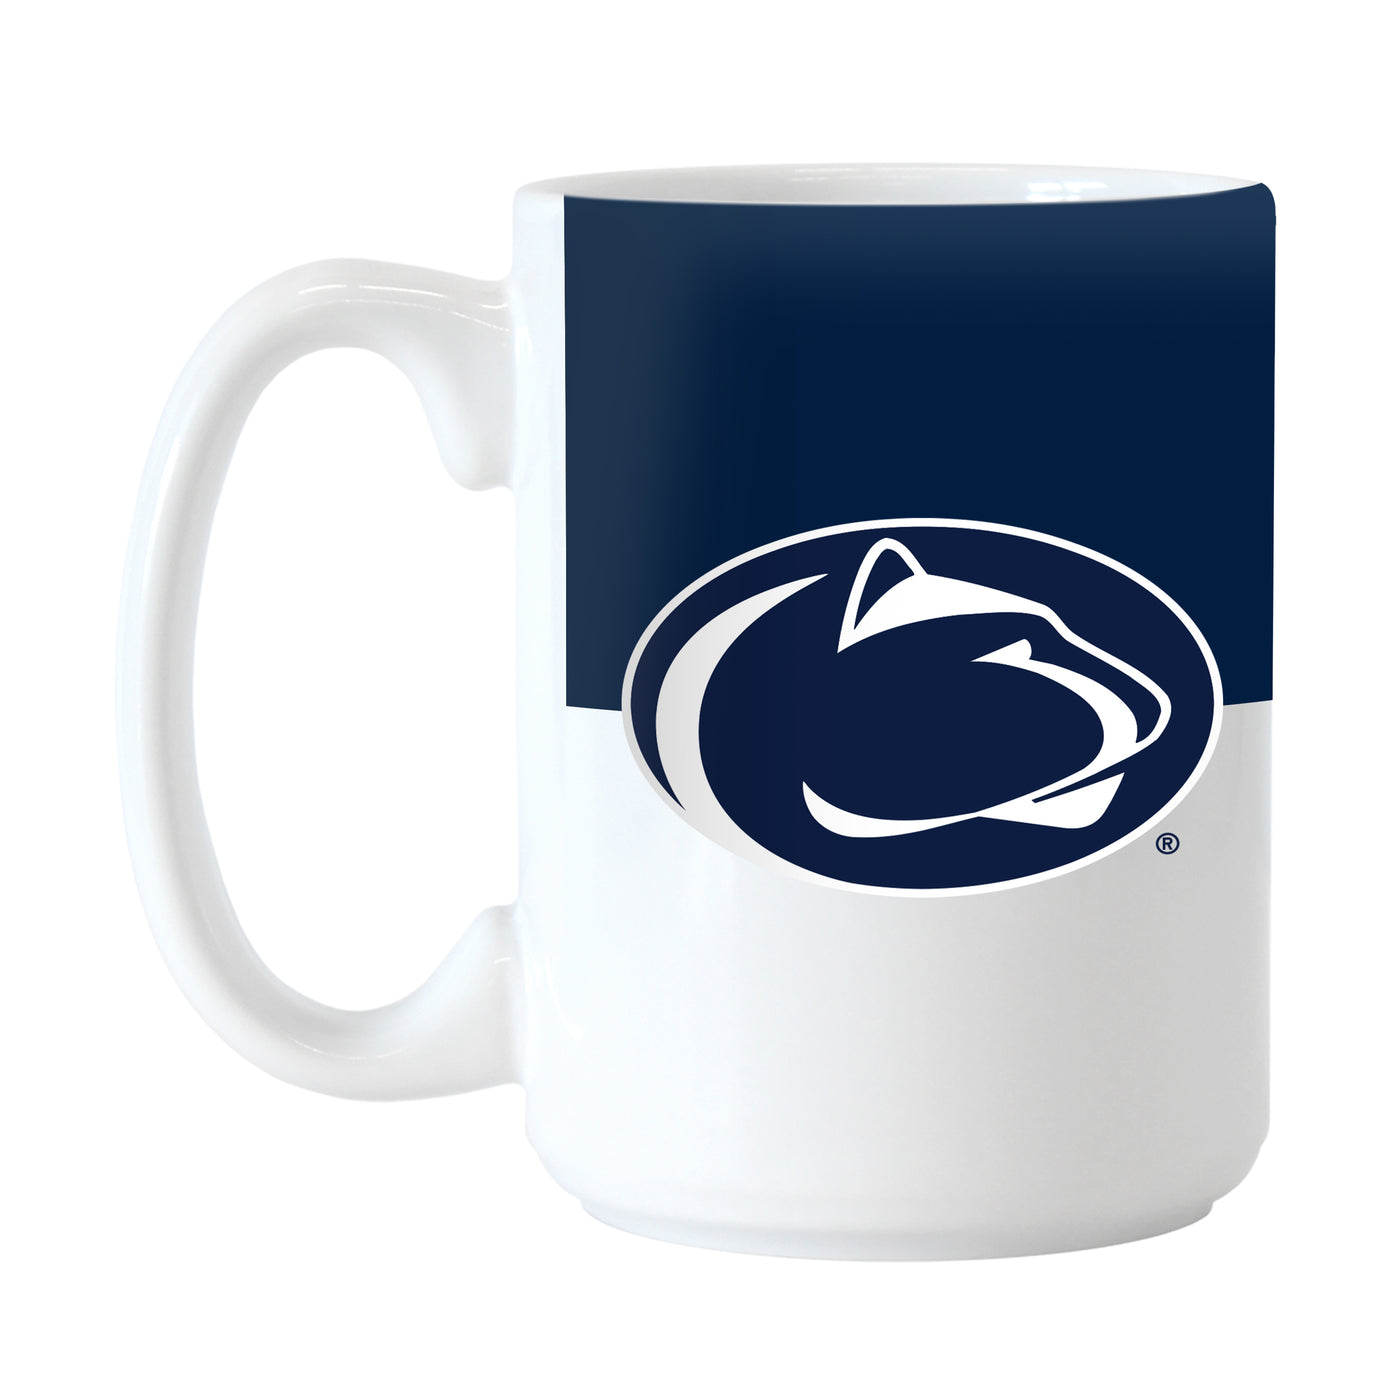 Penn State 15oz Colorblock Sublimated Mug